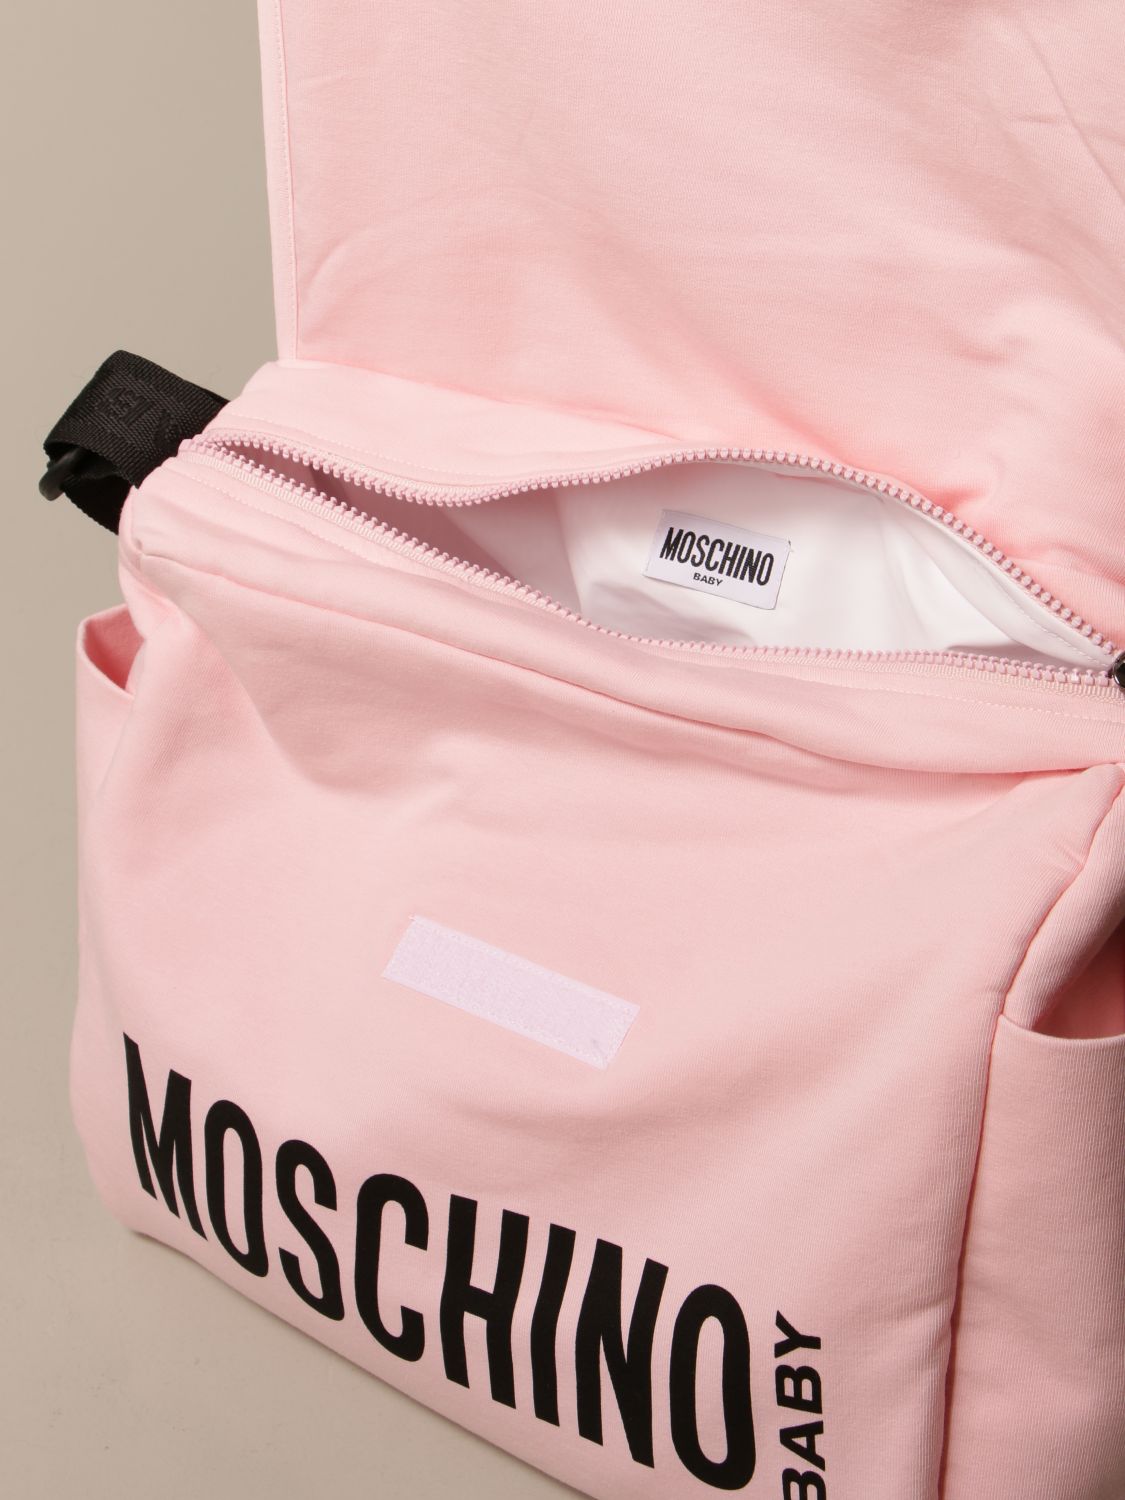 moschino baby bag pink